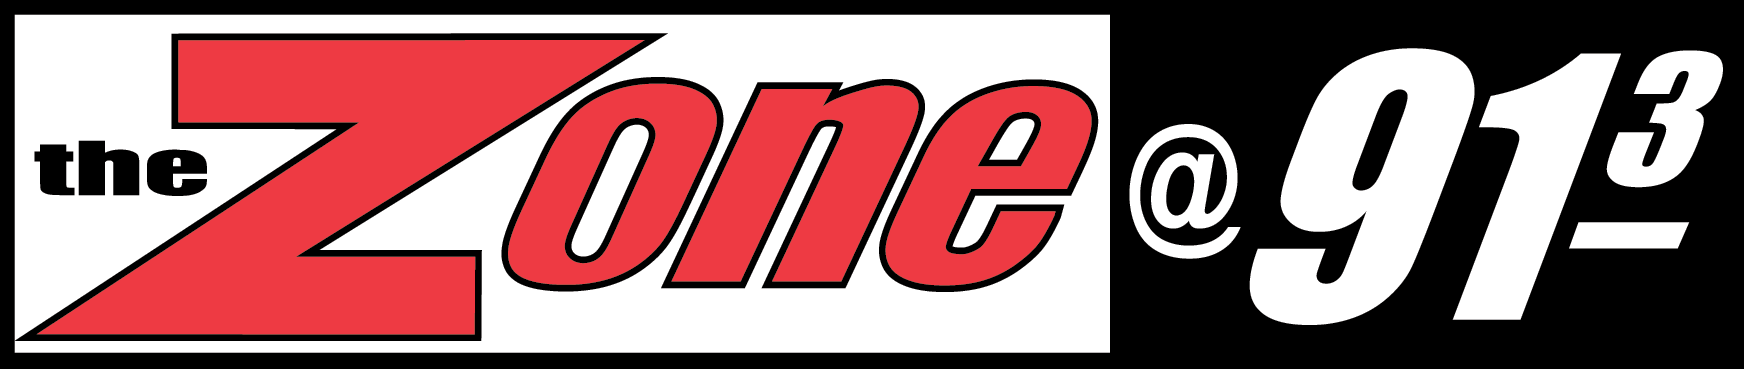 the Zone @91.3 logo